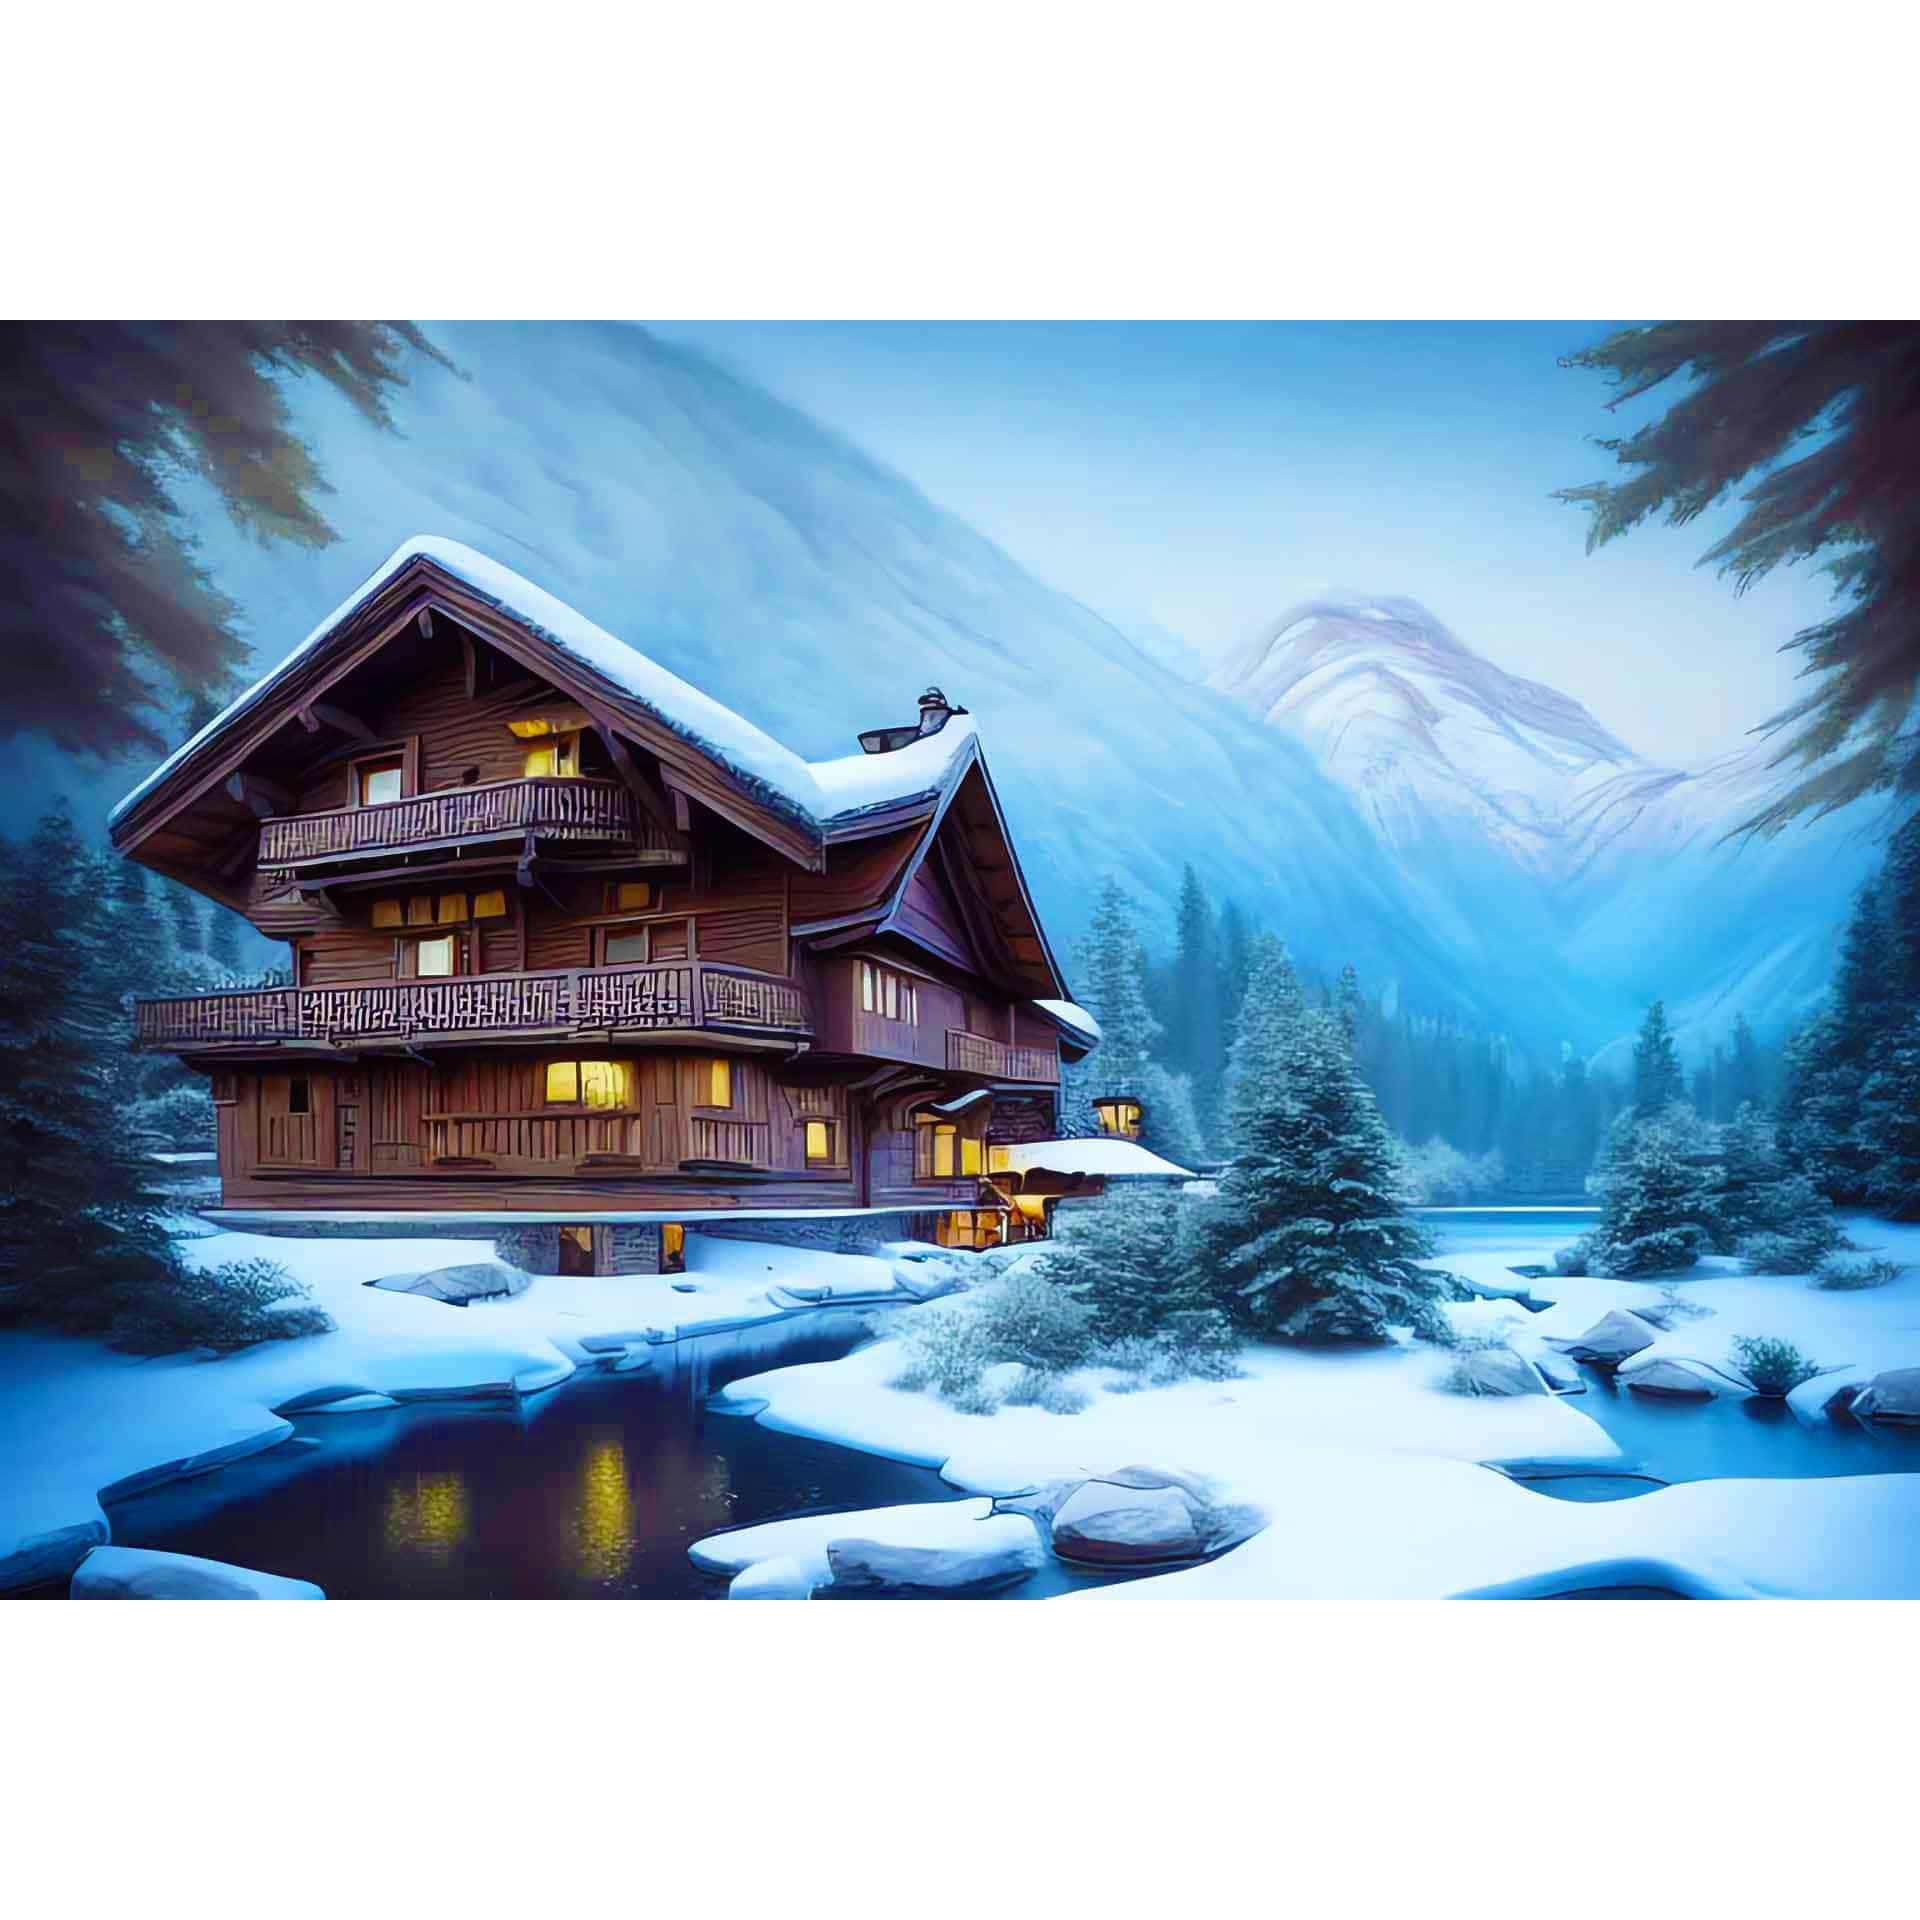 Diamond Painting - Urlaubshaus, Schneelandschaft - gedruckt in Ultra-HD - Horizontal, Winter